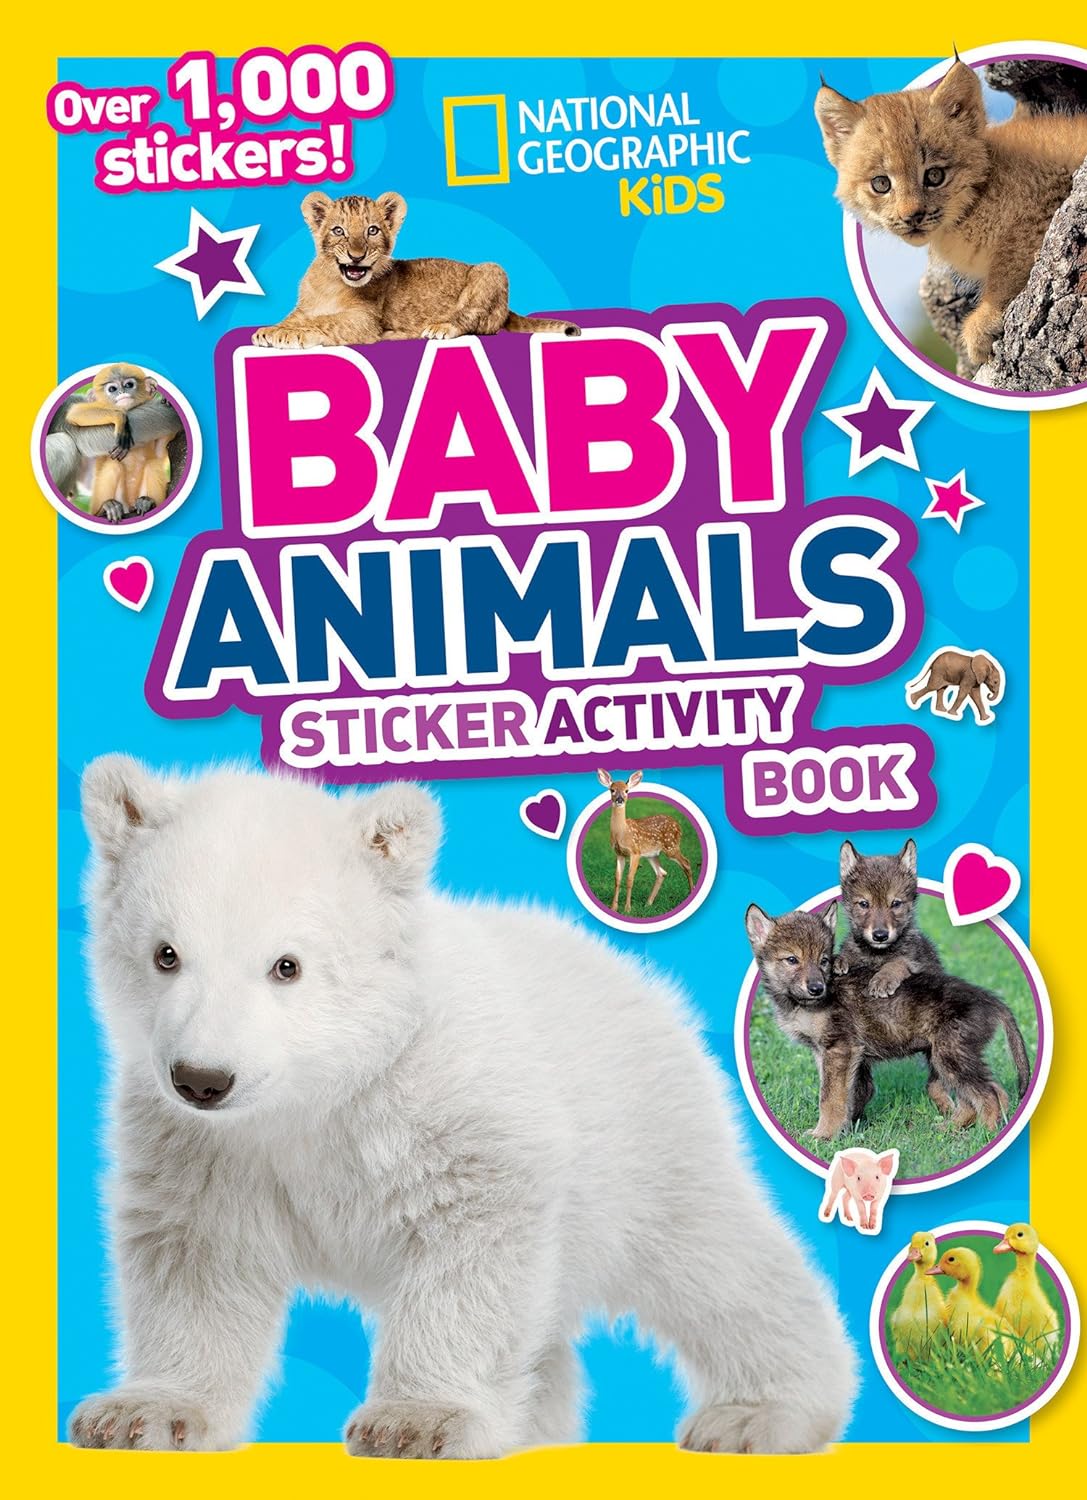 National Geographic Kids Sticker Activity Book